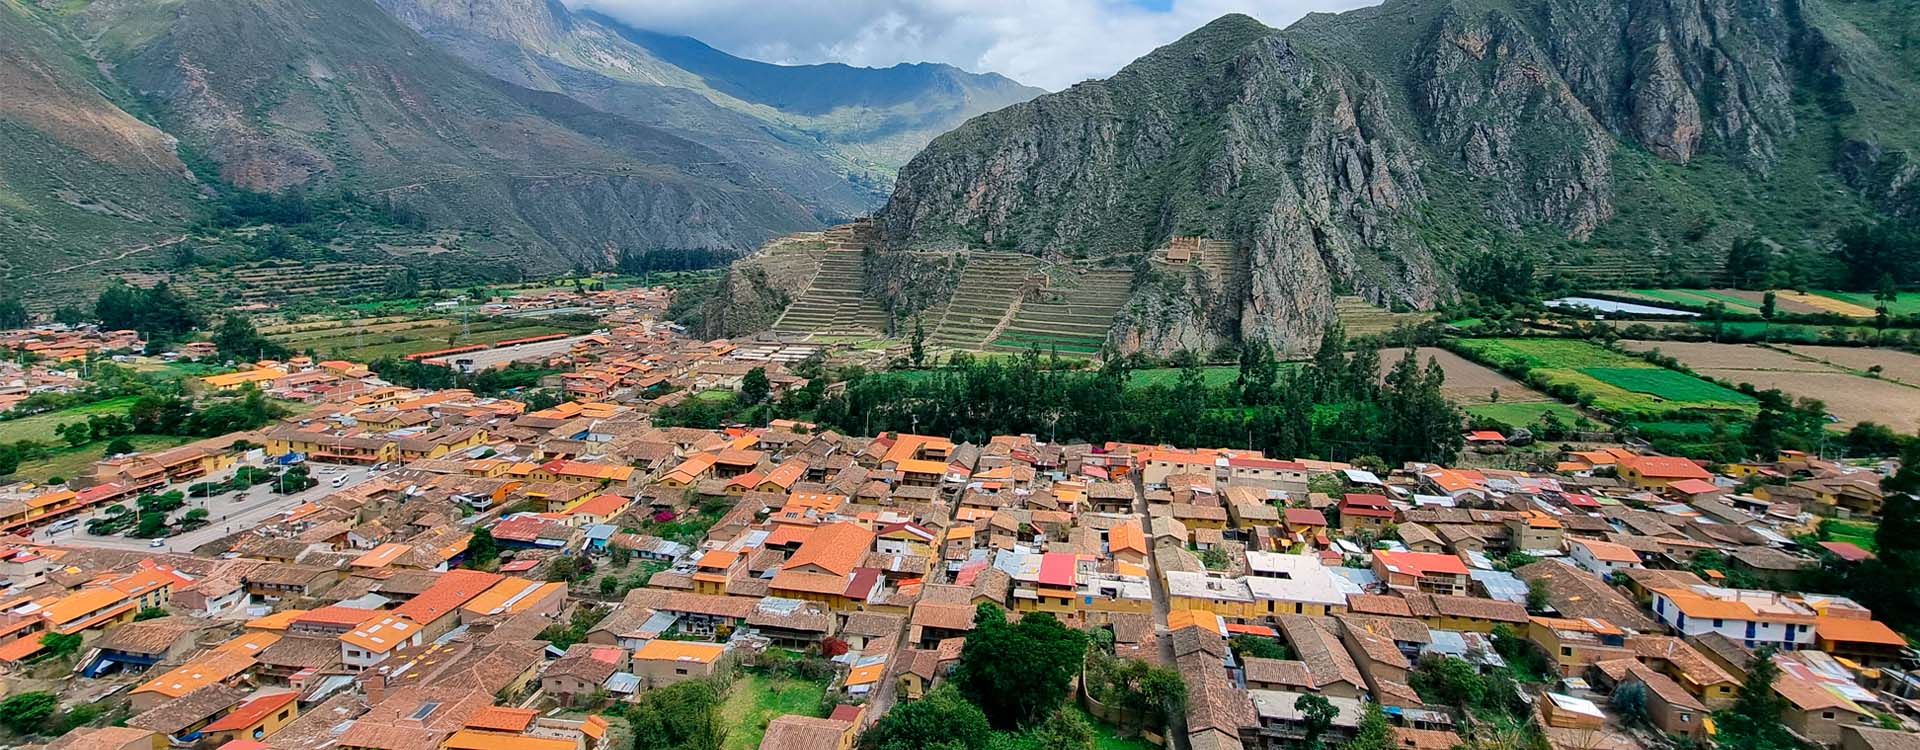 Sacred Valley Tour from Ollantaytambo or Urubamba to Cusco